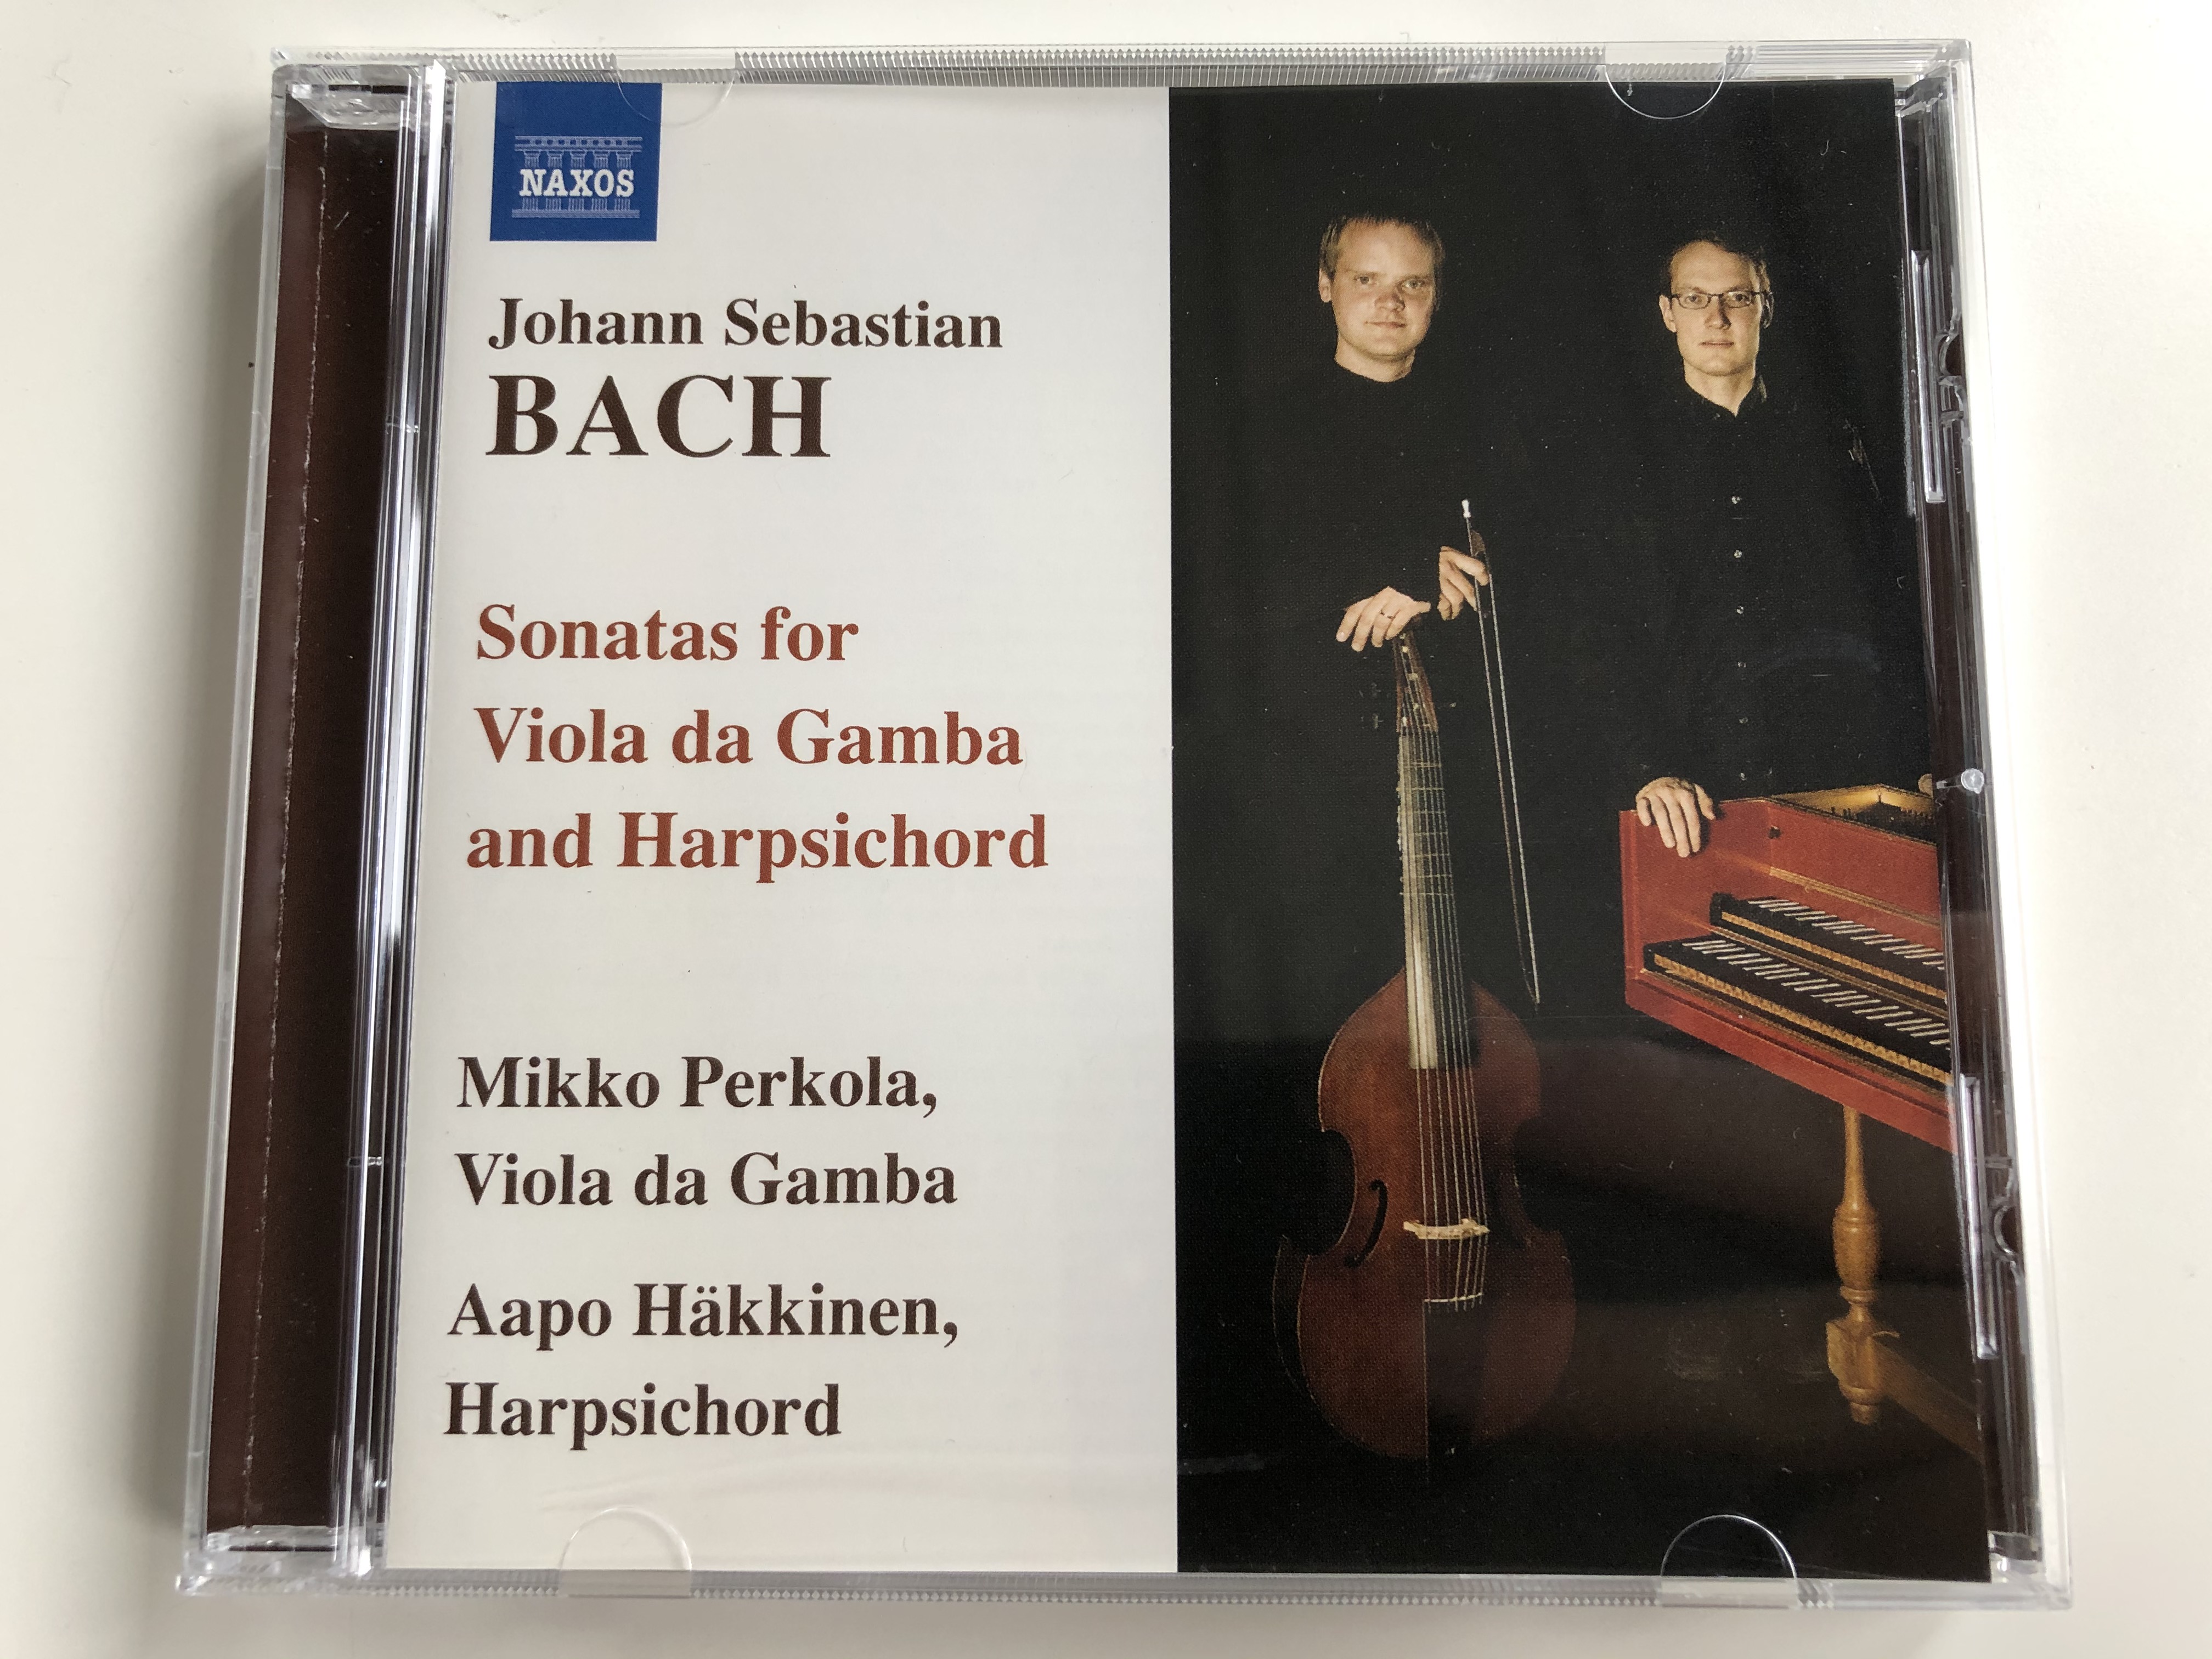 johann-sebastian-bach-sonatas-for-viola-da-gamba-and-harpsichord-viola-da-gamba-mikko-perkola-harpichord-aapo-h-kkinen-naxos-rights-international-ltd.-audio-cd-2007-8-1-.jpg